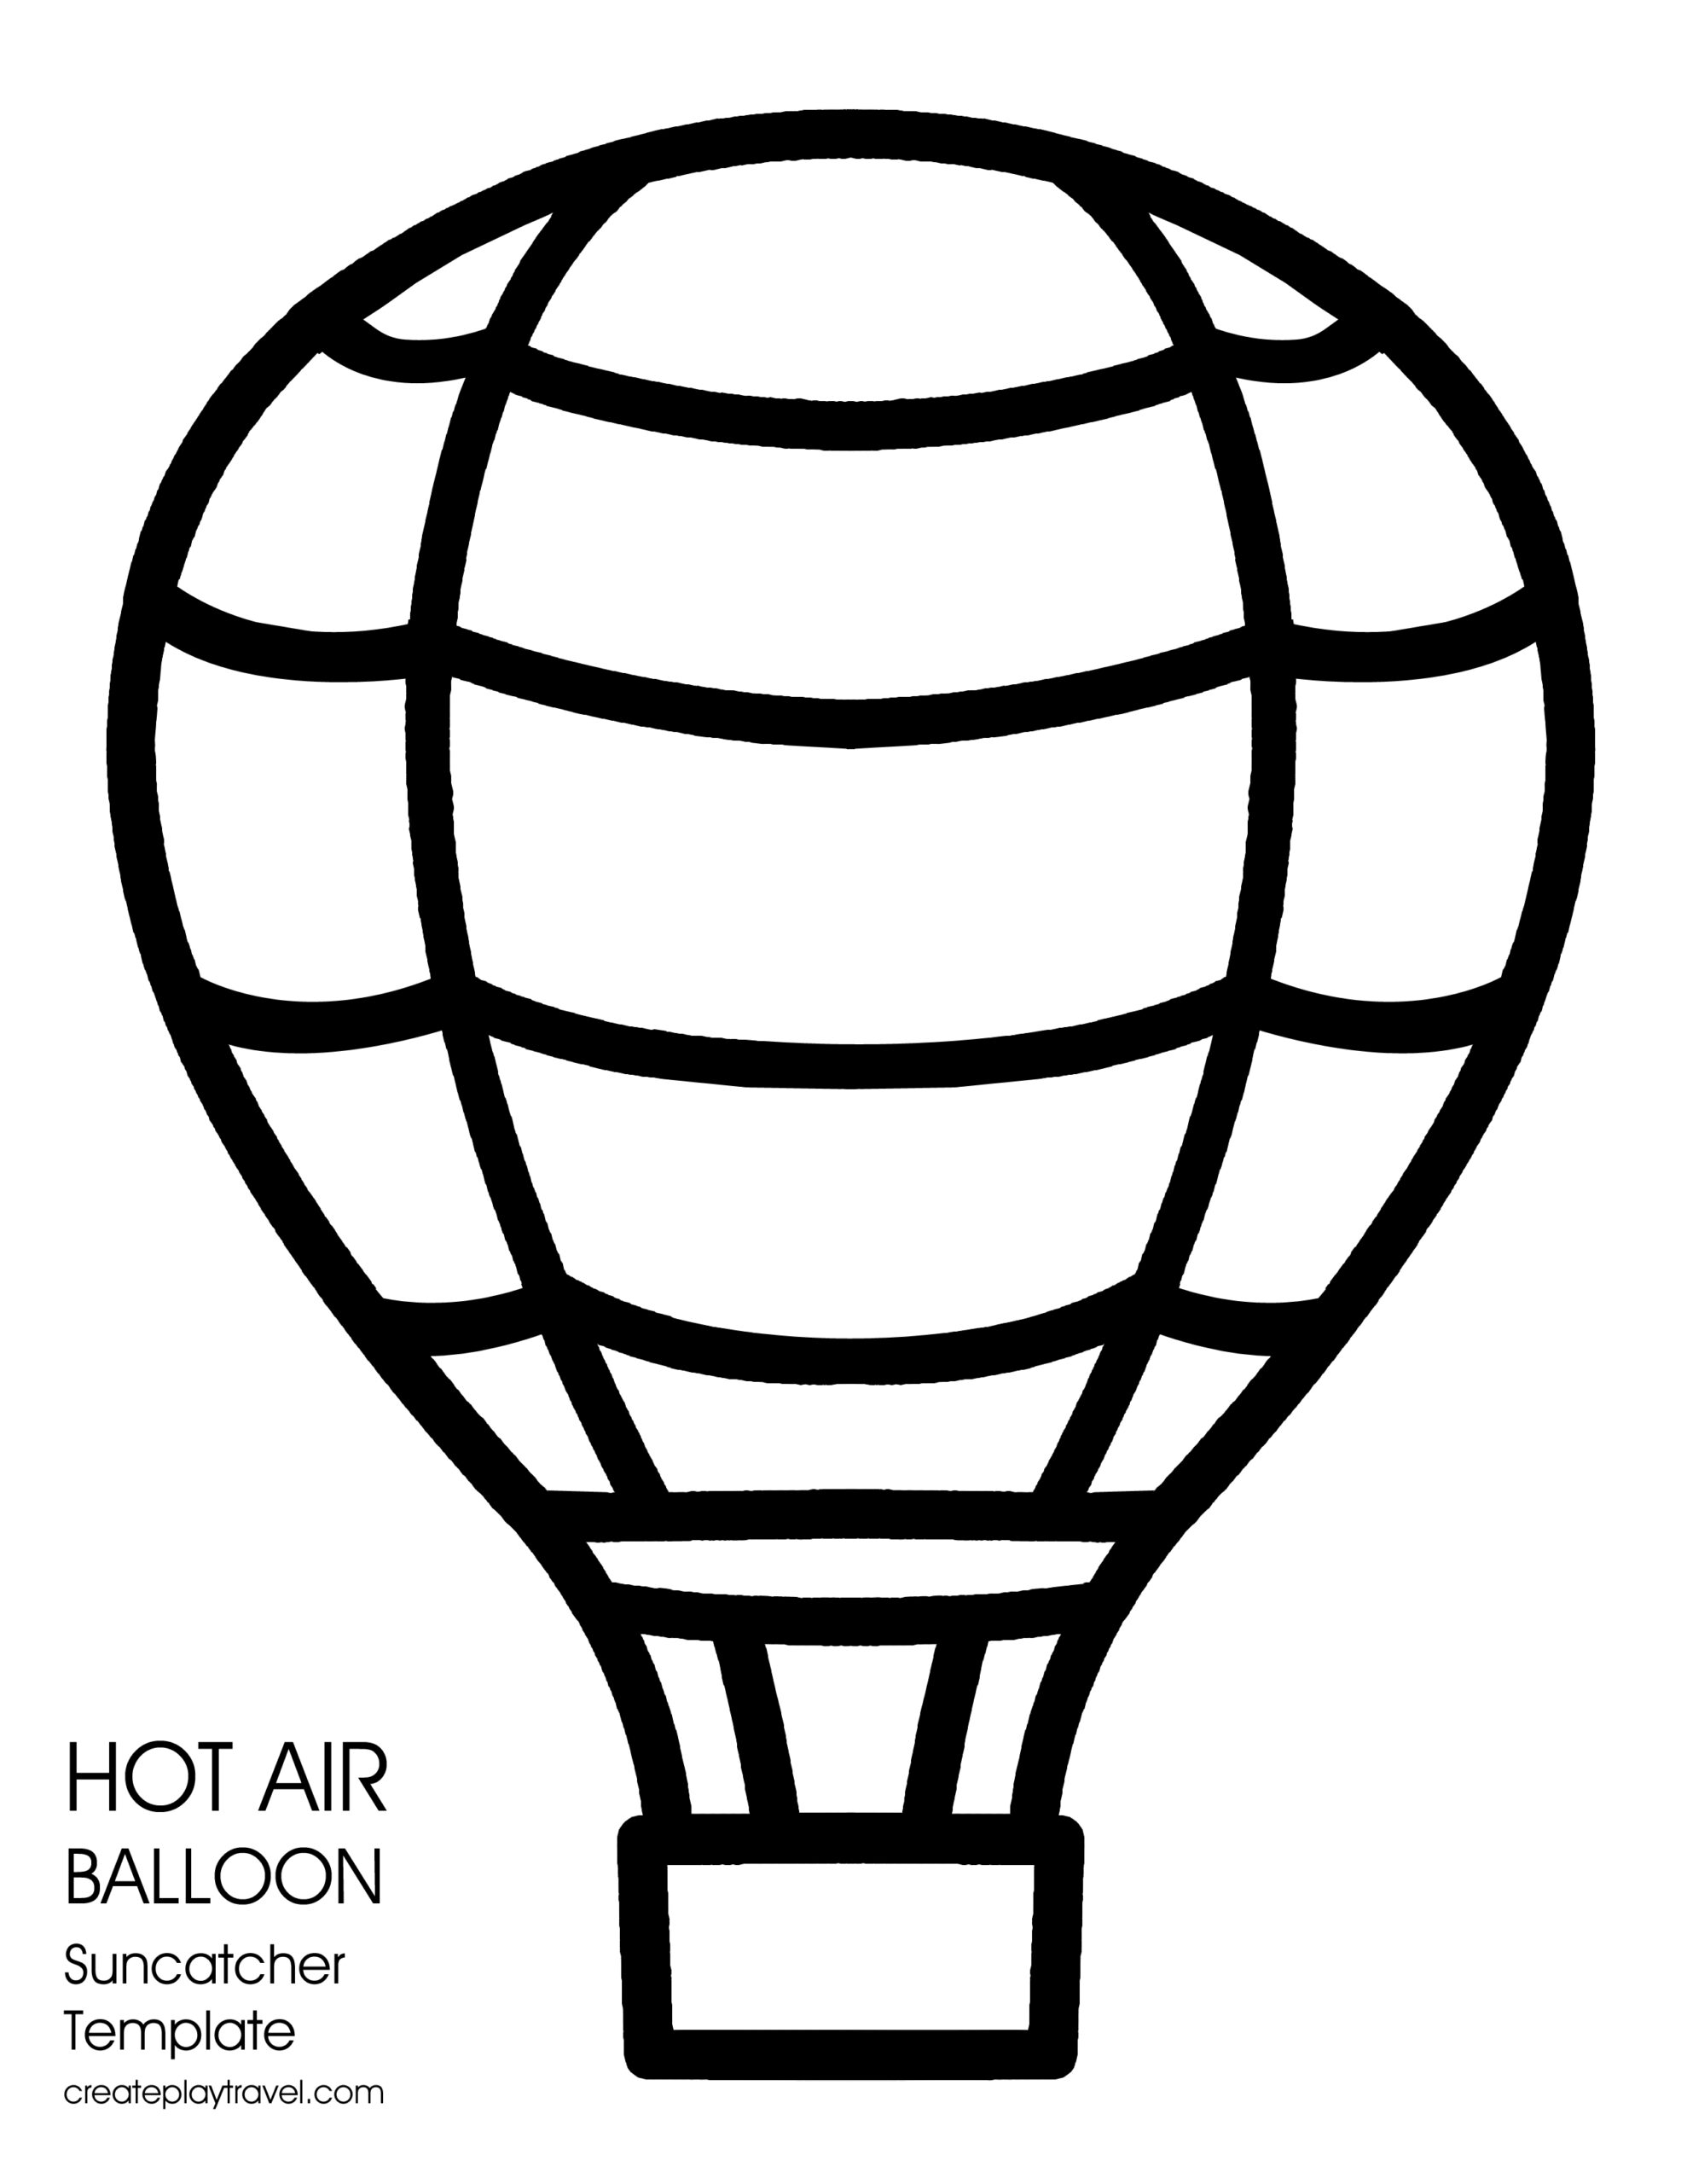 Printable template hot air balloon suncatcher